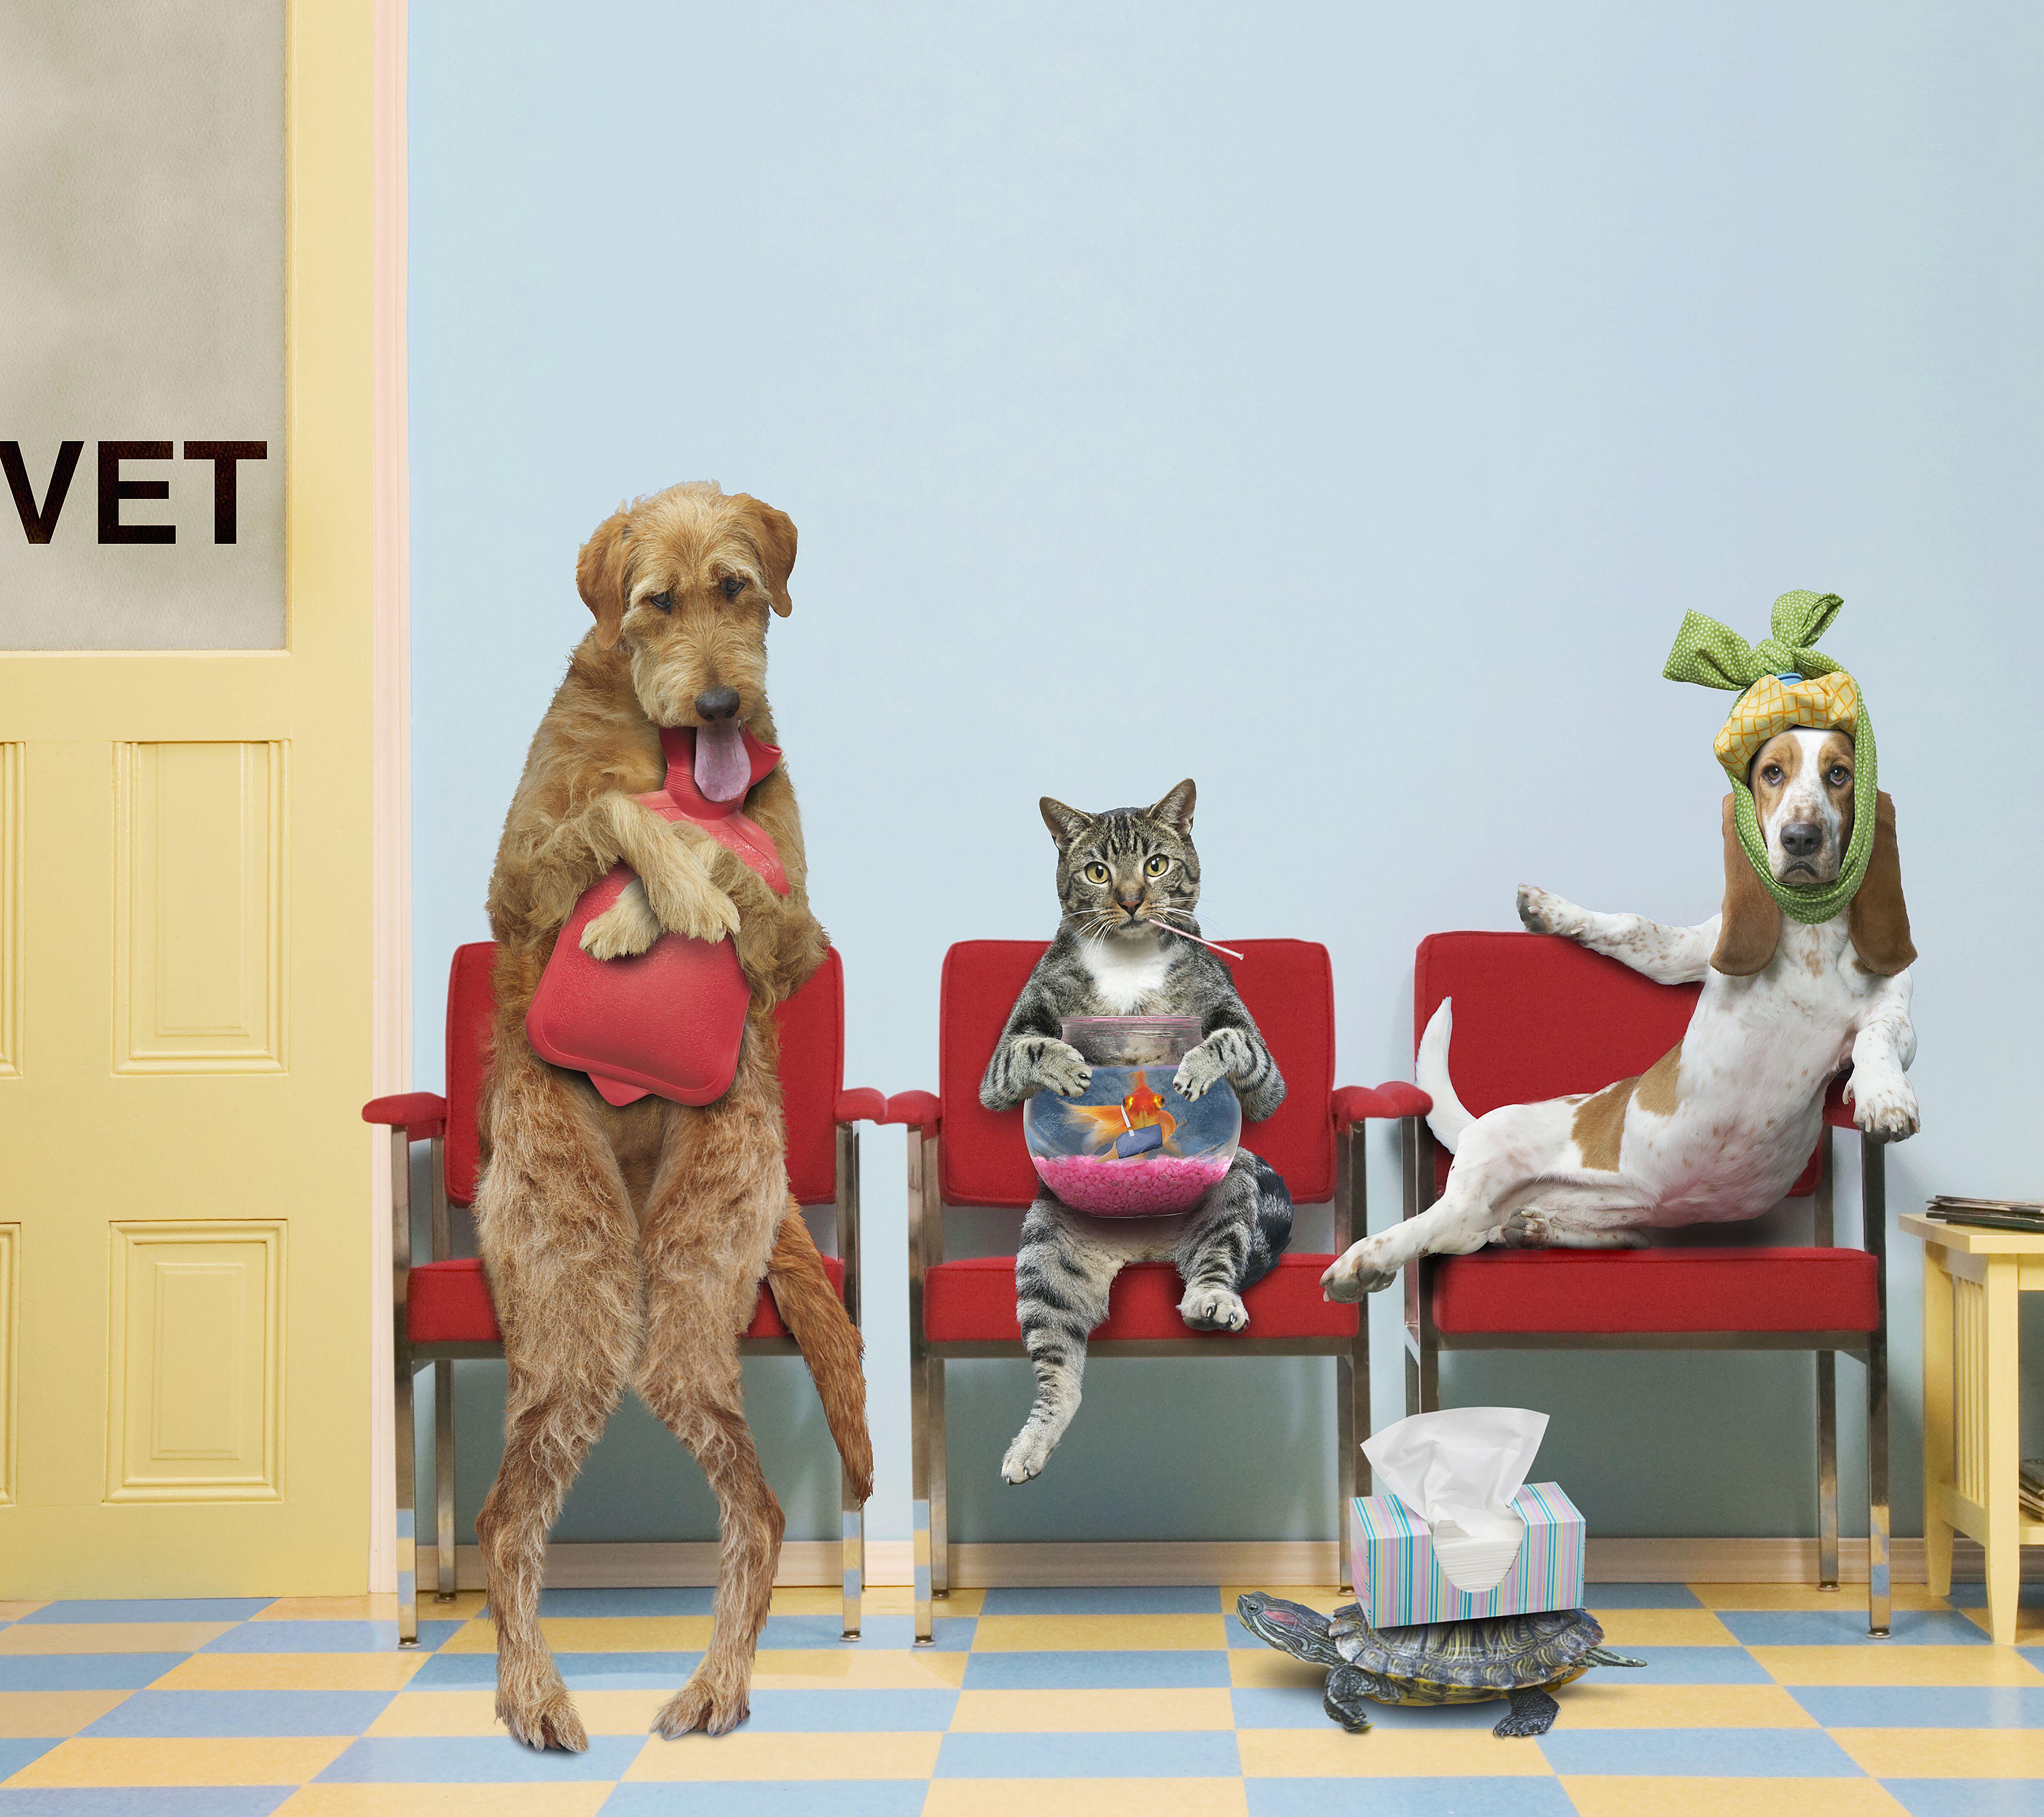 Dogs in veterinary waiting room (illustration)